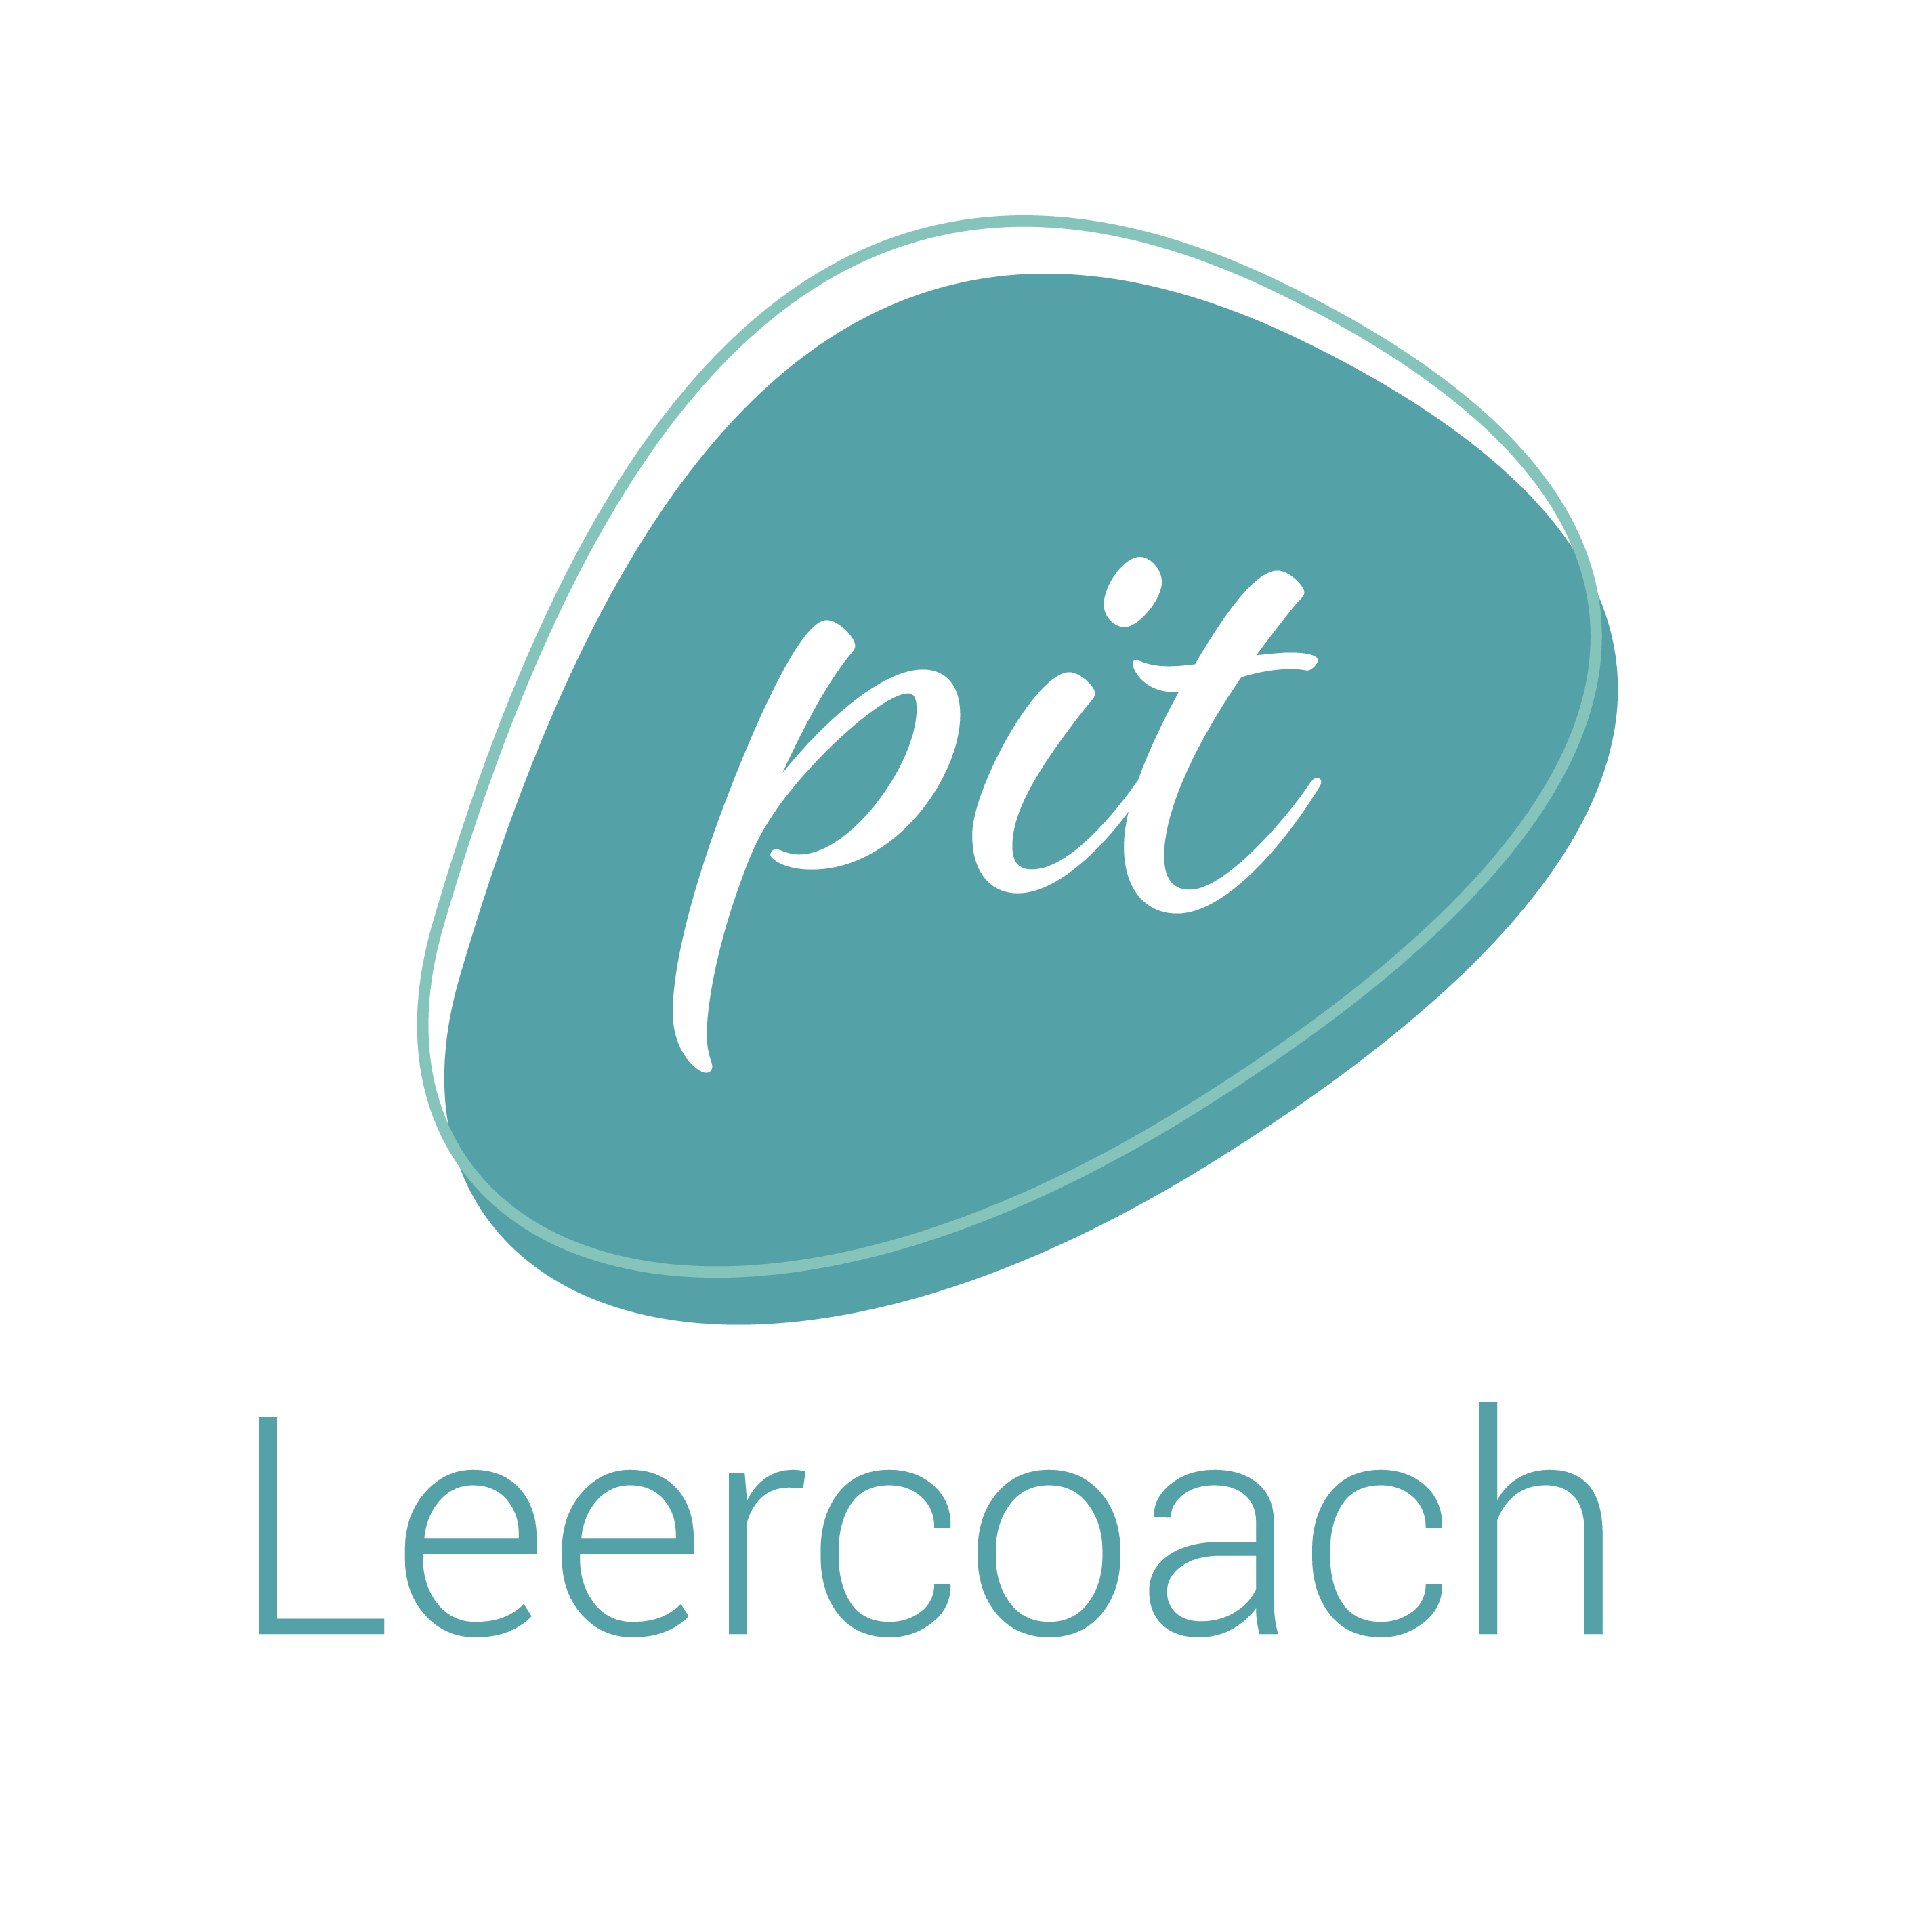 Pit leercoach logo